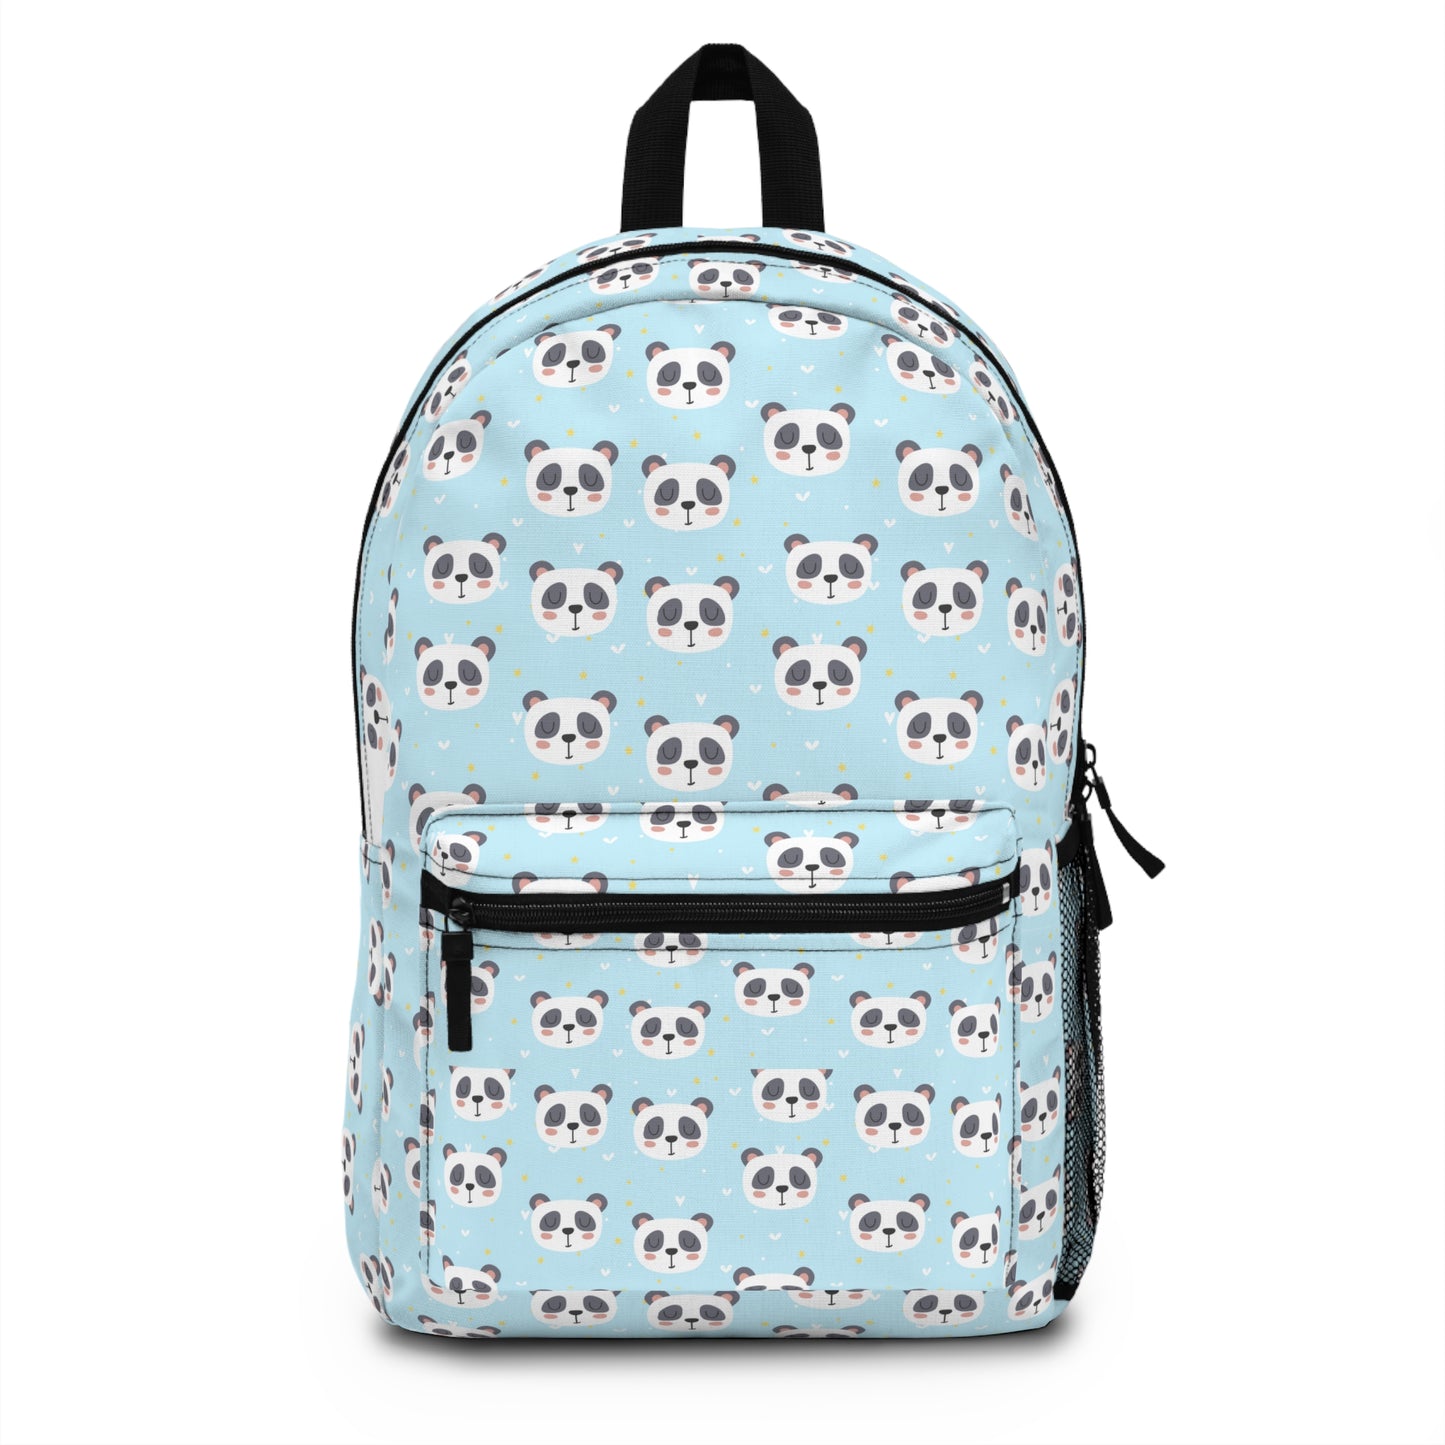 blue backpack with panda bear print